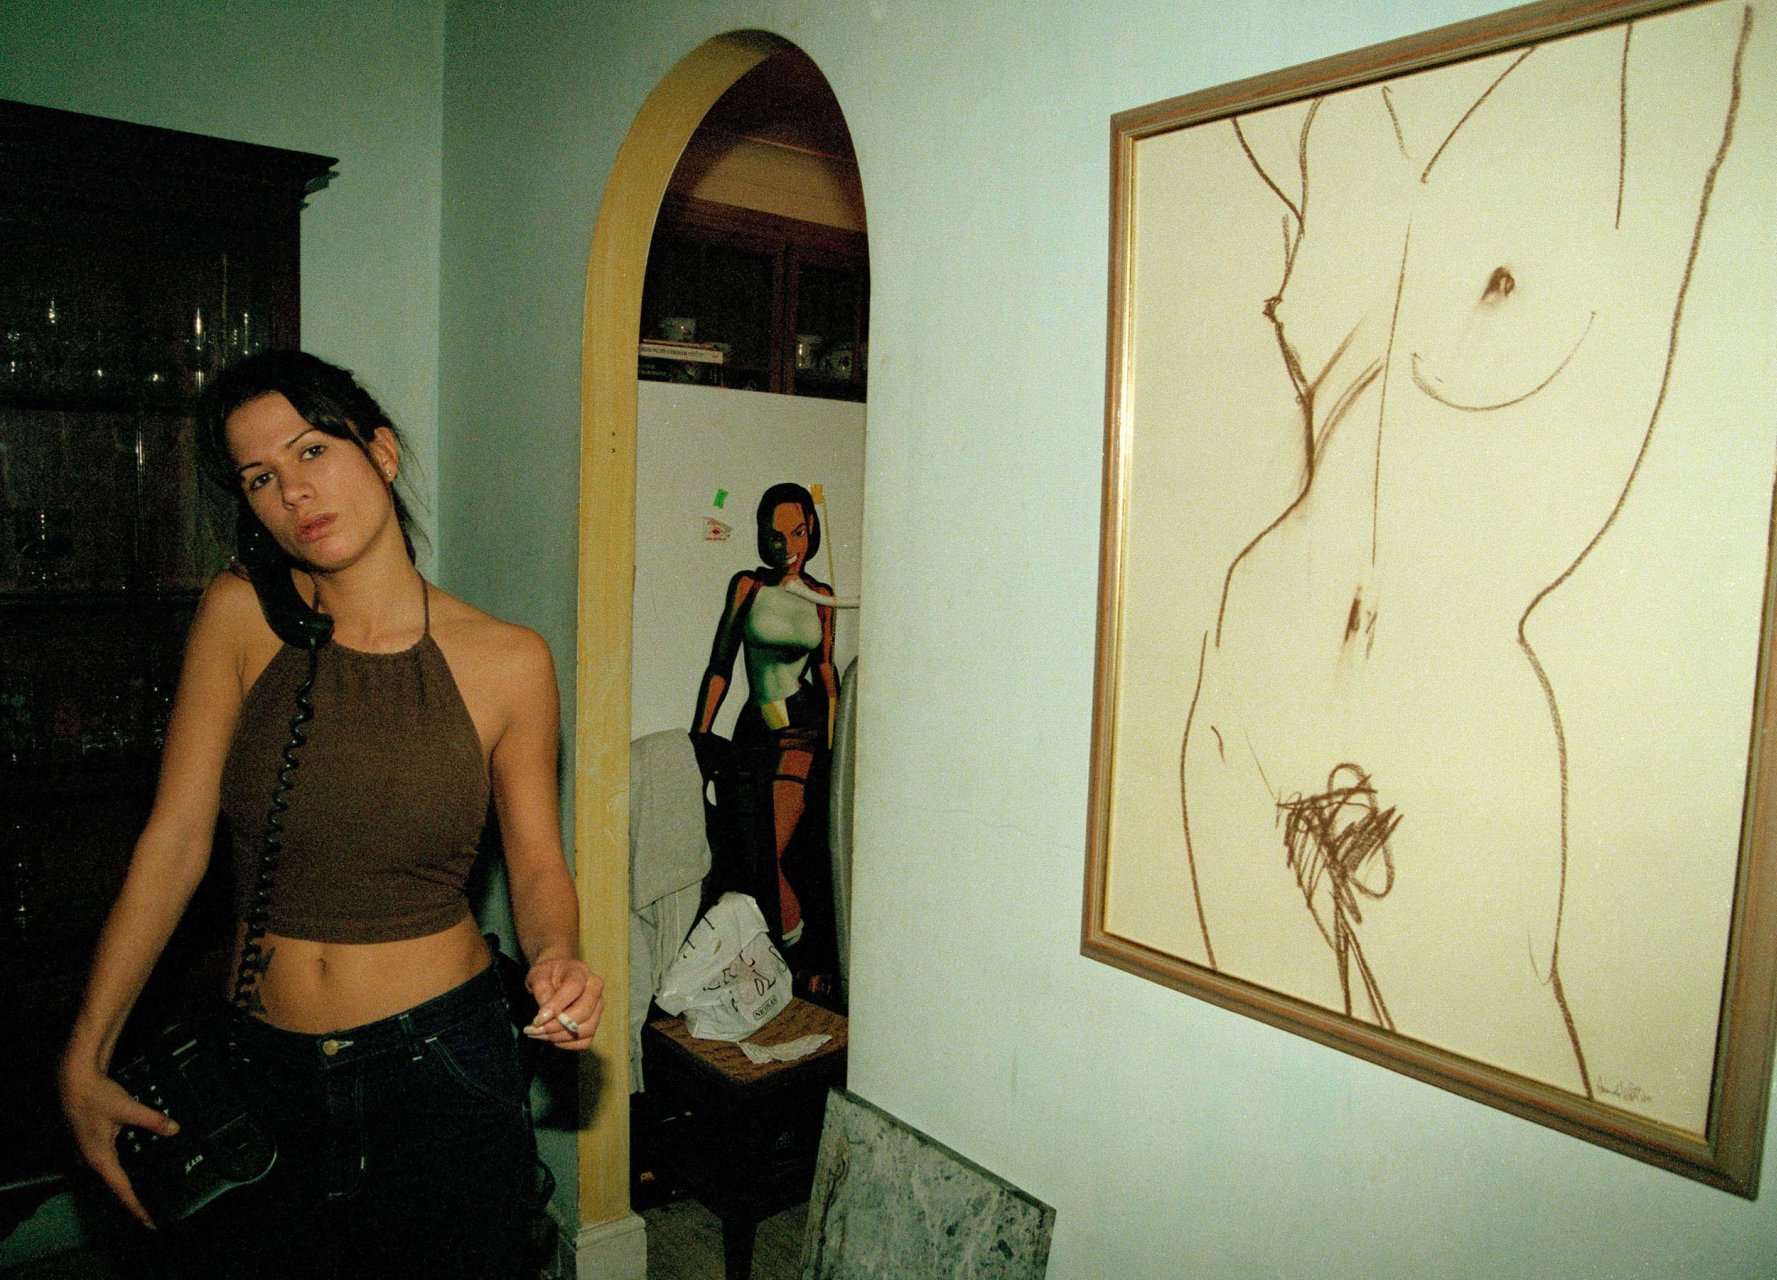 Rhona Mitra Topless & Sexy (4 Photos)